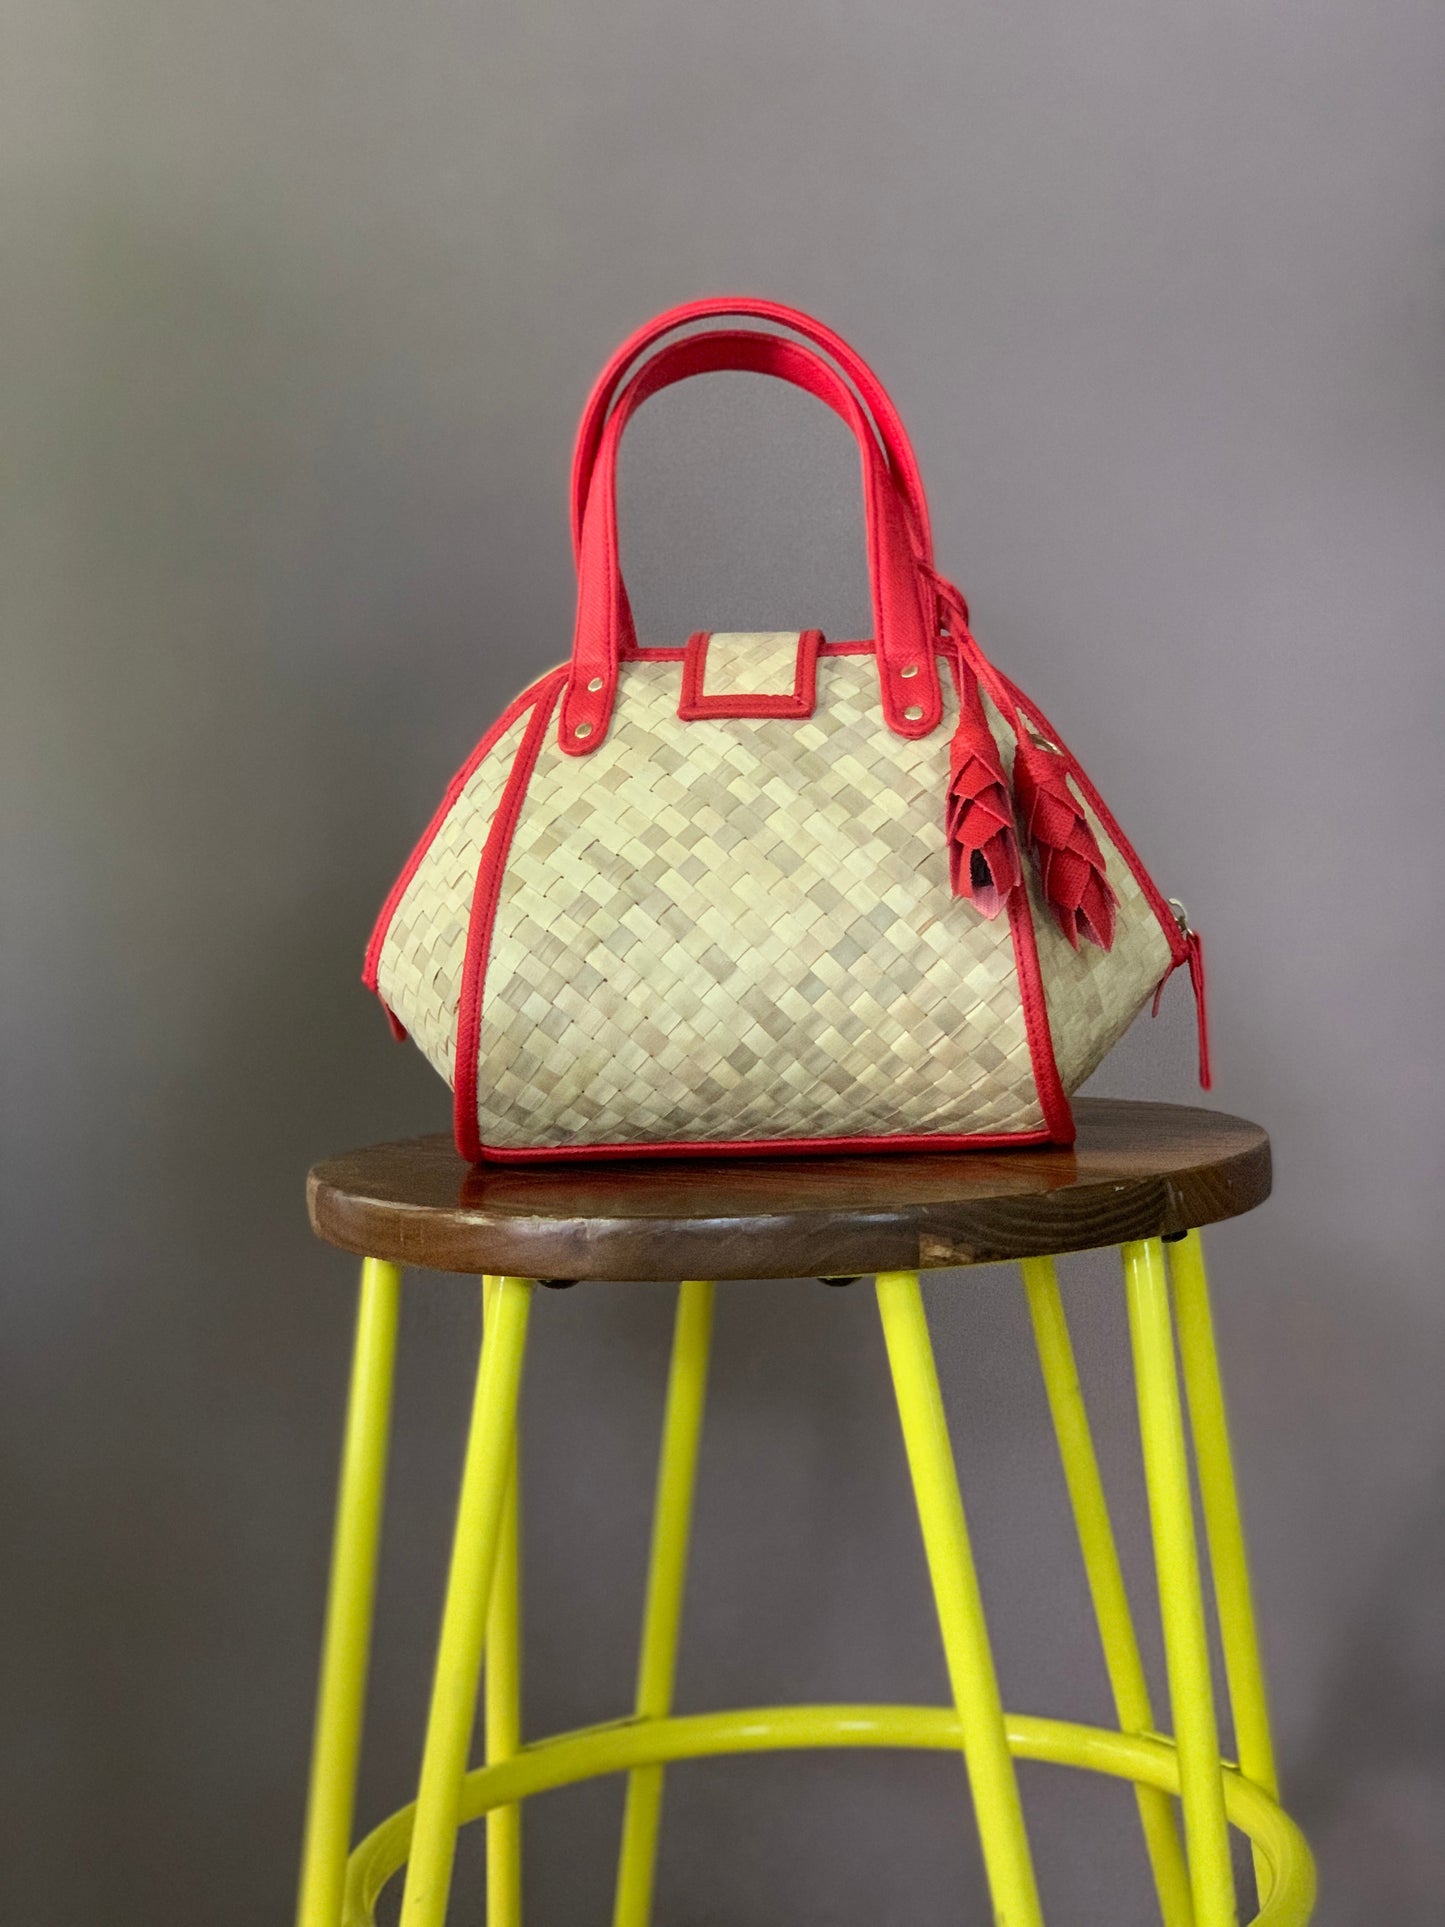 Kawai Pandan Handbag with Leaf Tassel and Long Strap in Red